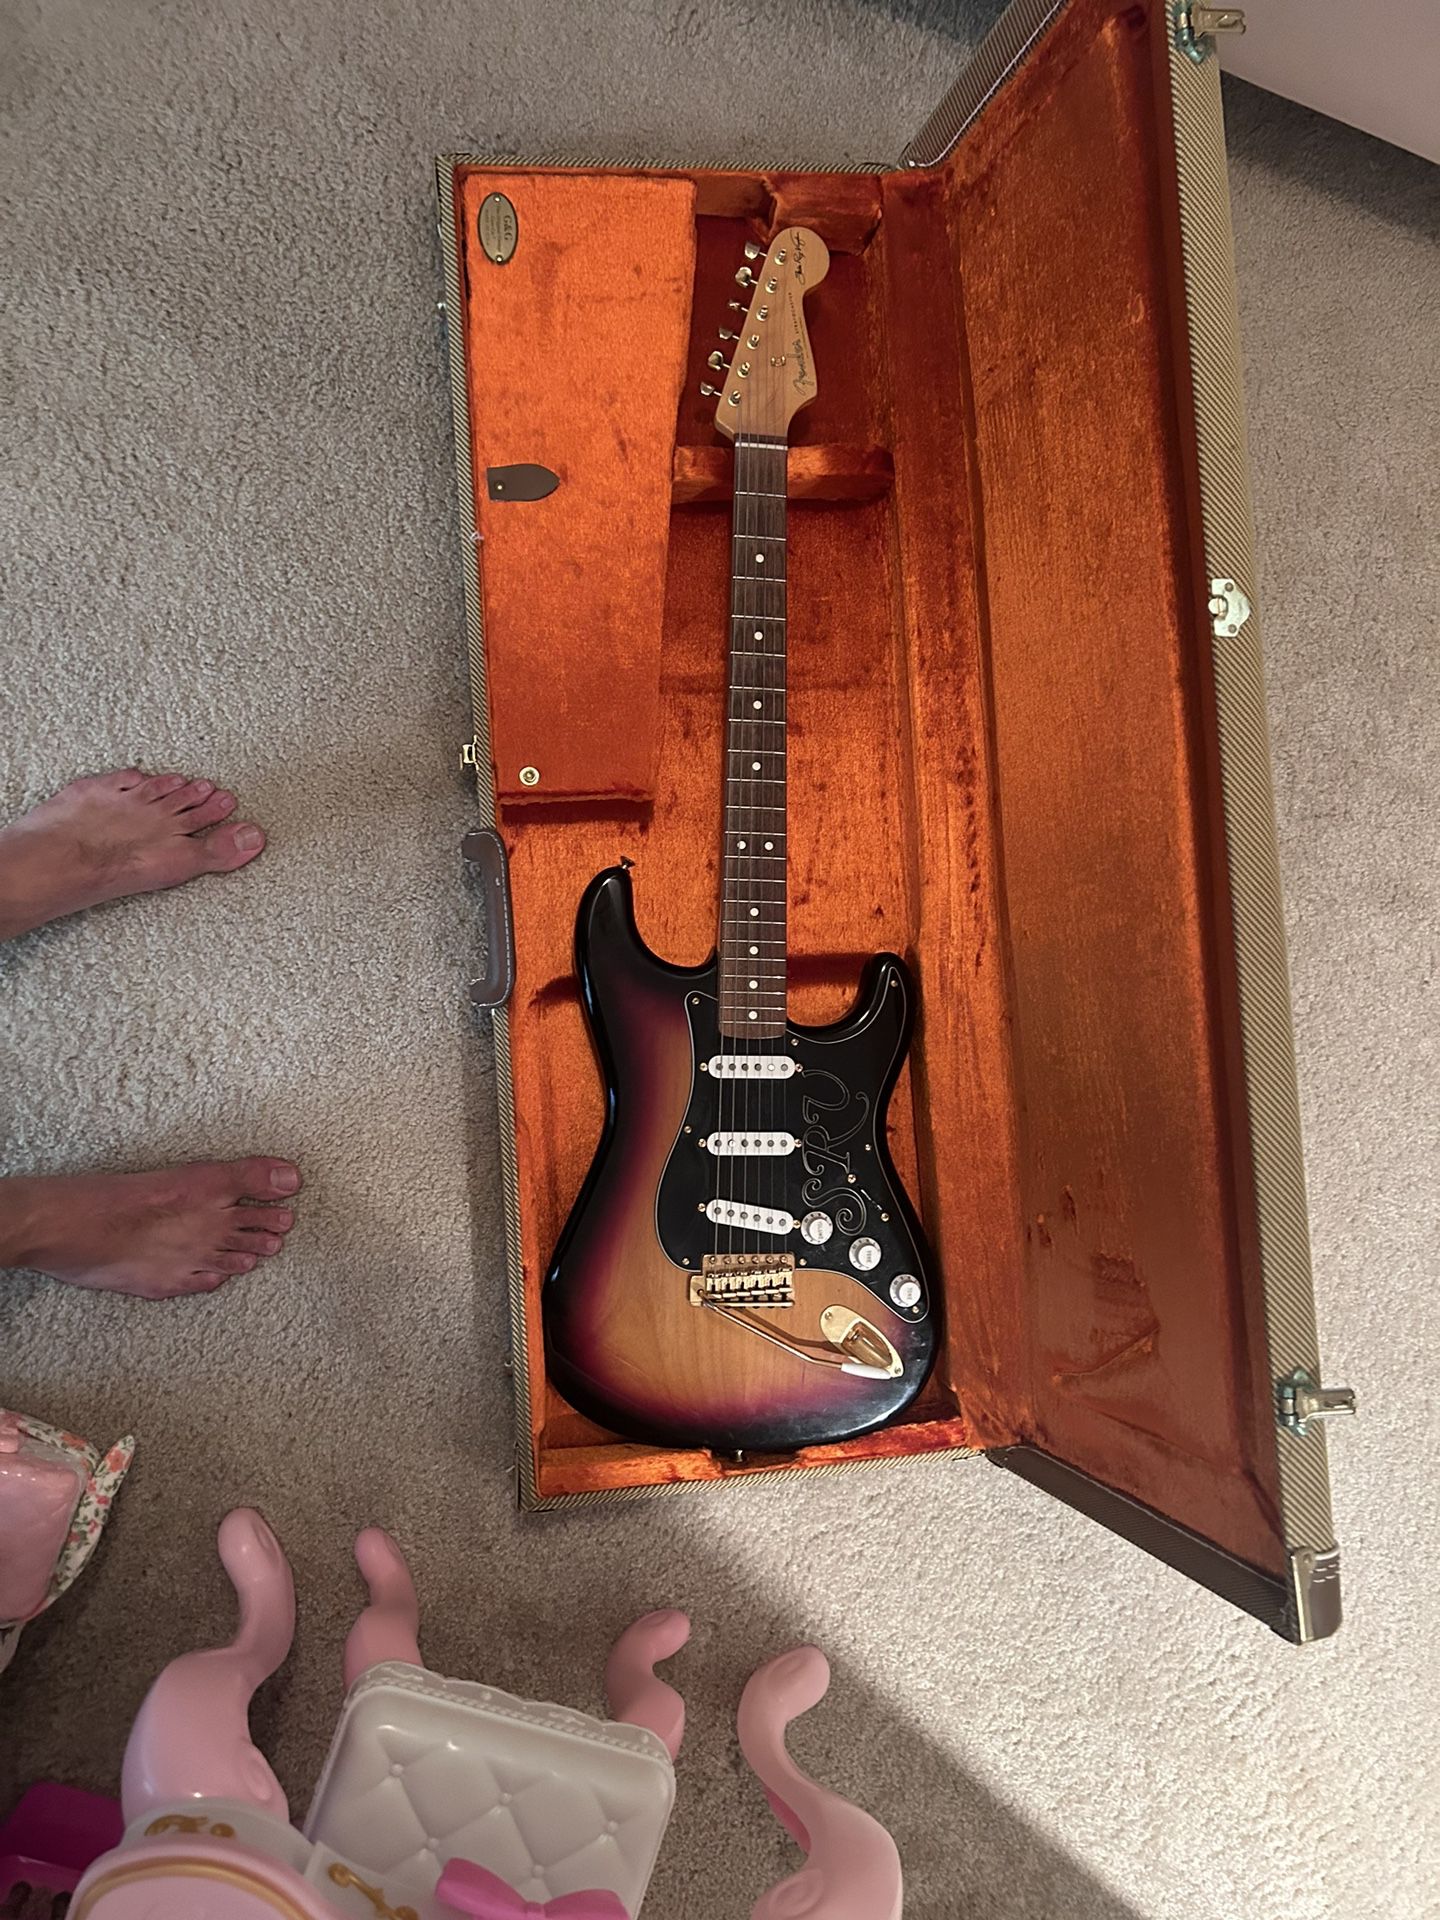 SRV Stratocaster And Case